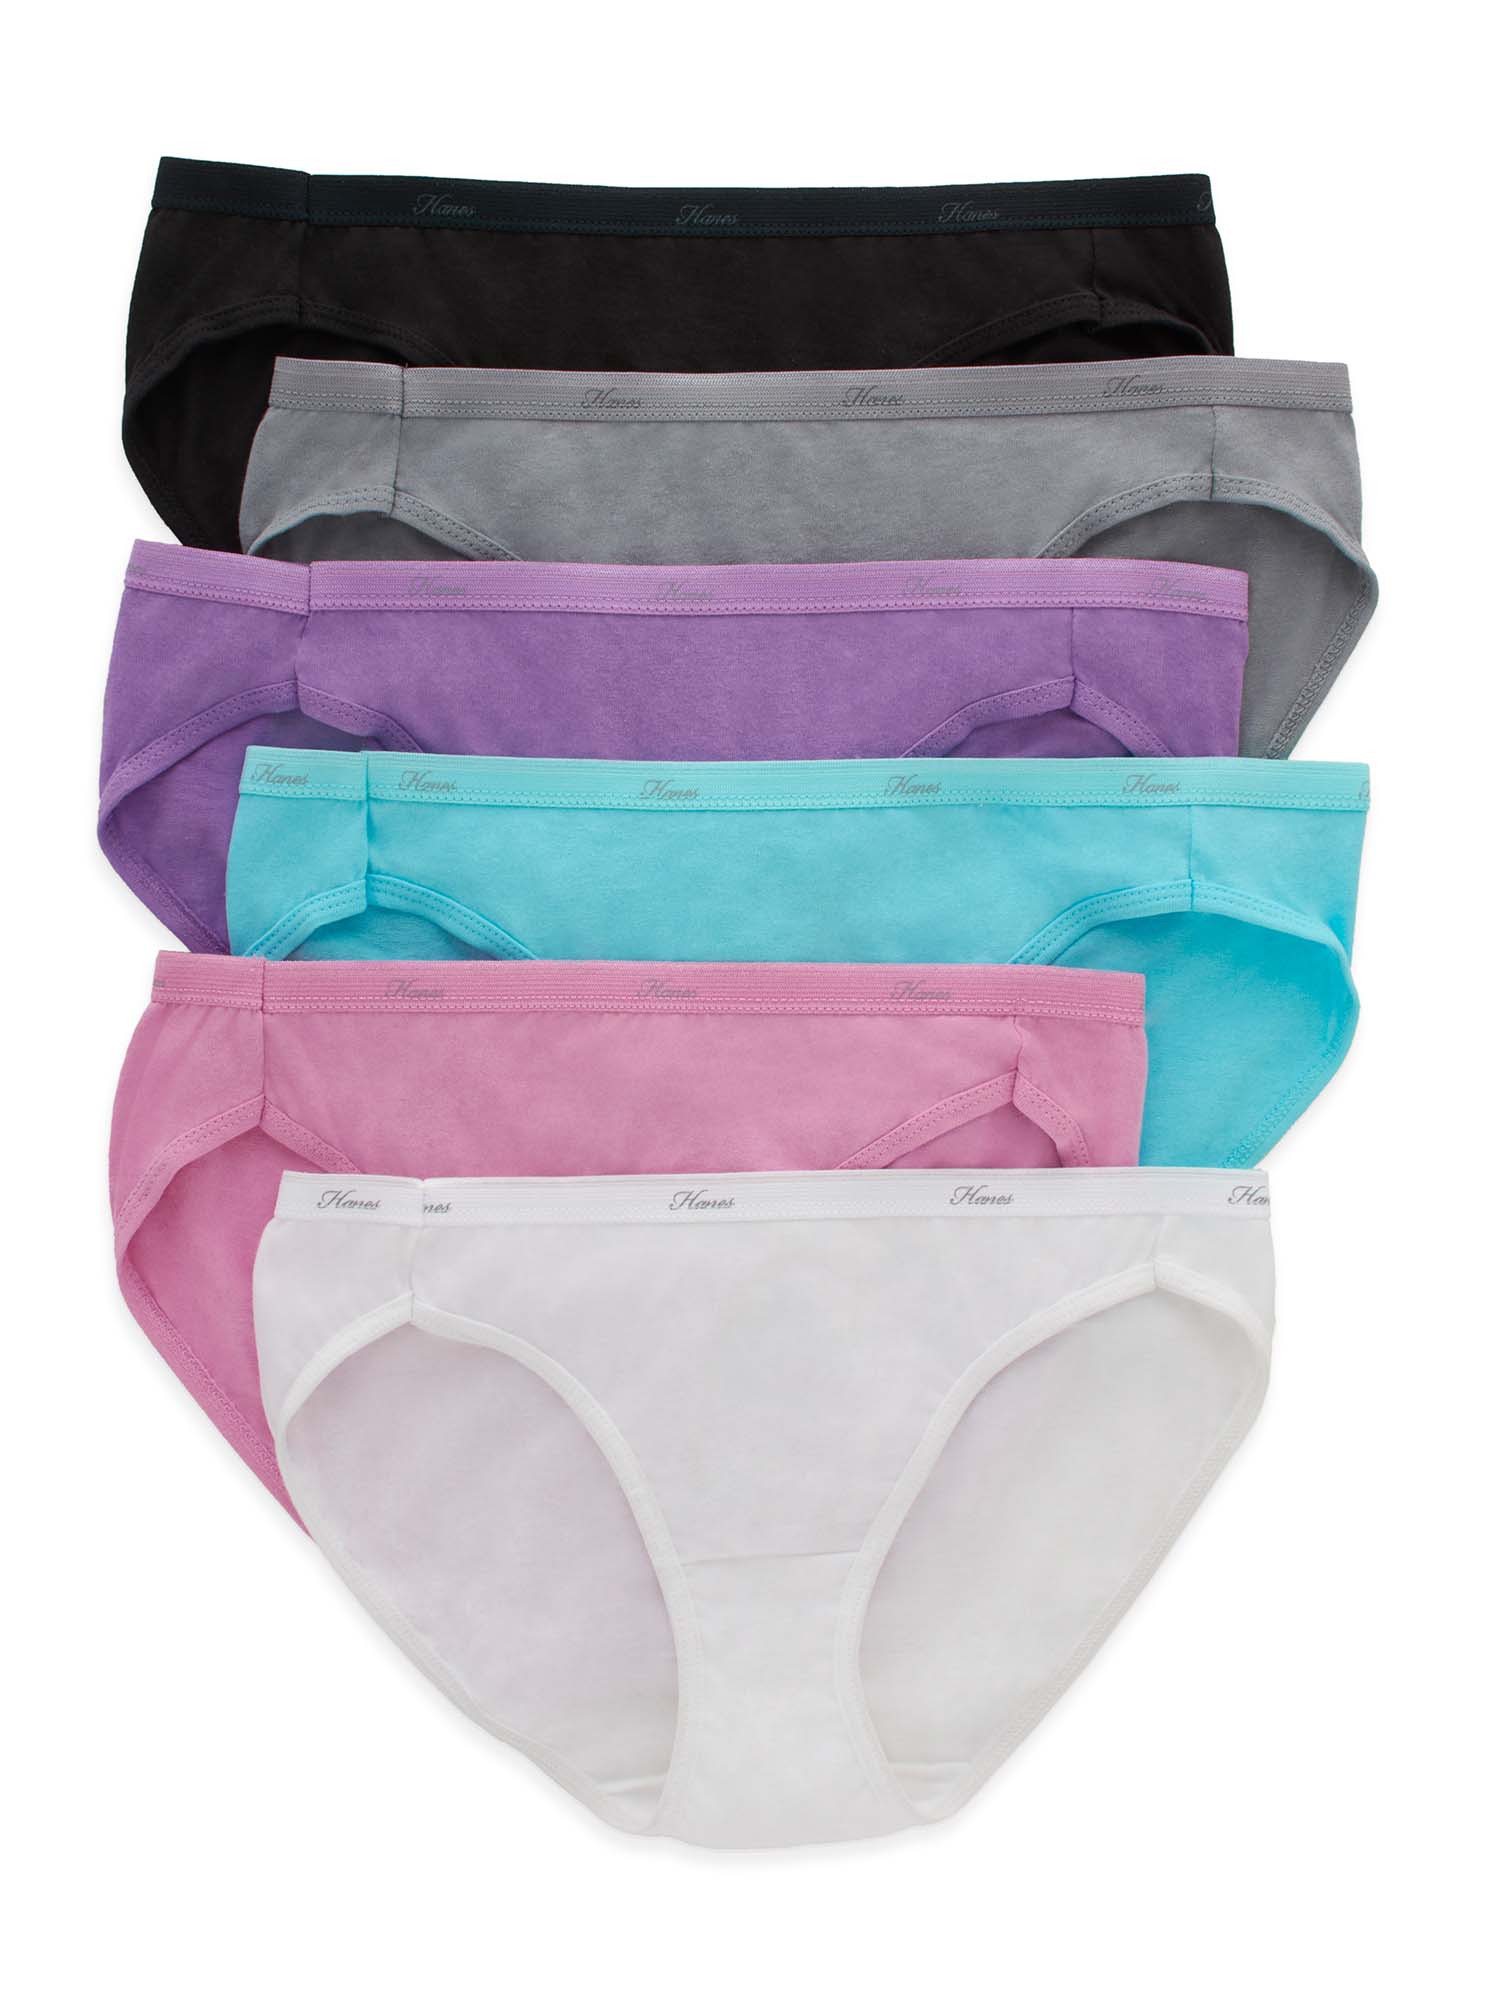 Hanes Women's Cotton Bikini Underwear, 6-Pack - image 1 of 7